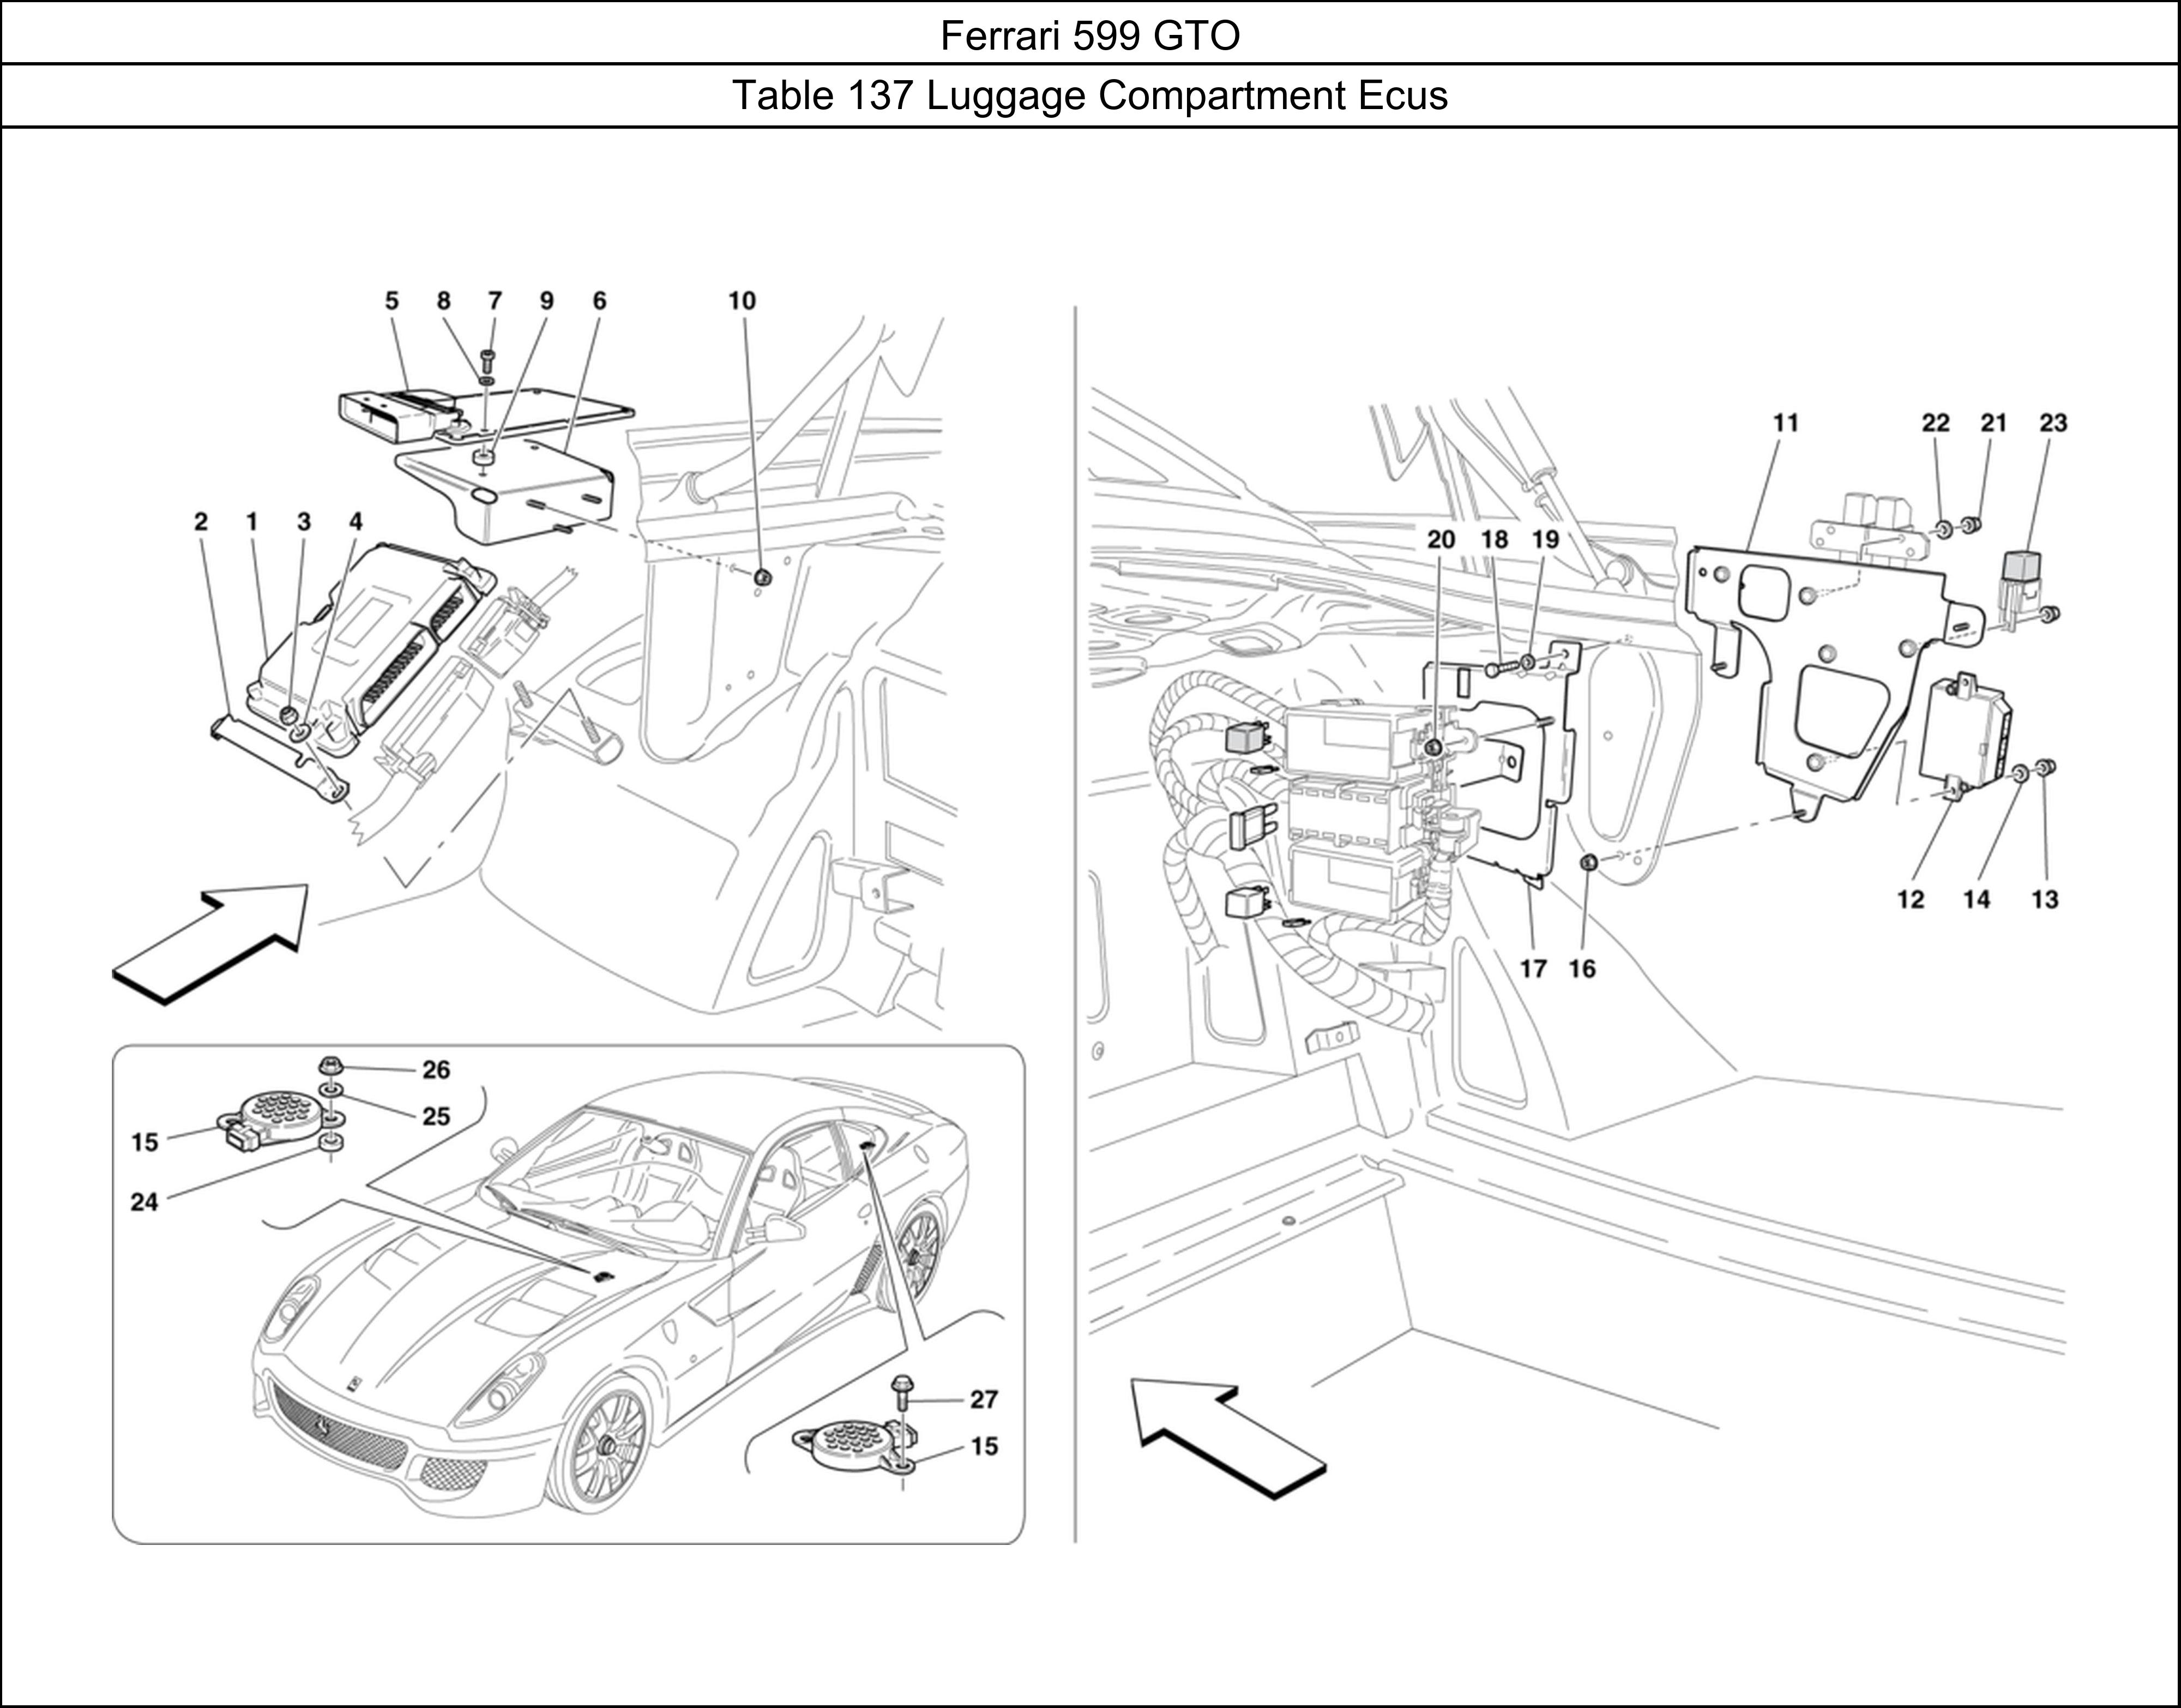 Ferrari Parts Ferrari 599 GTO Table 137 Luggage Compartment Ecus